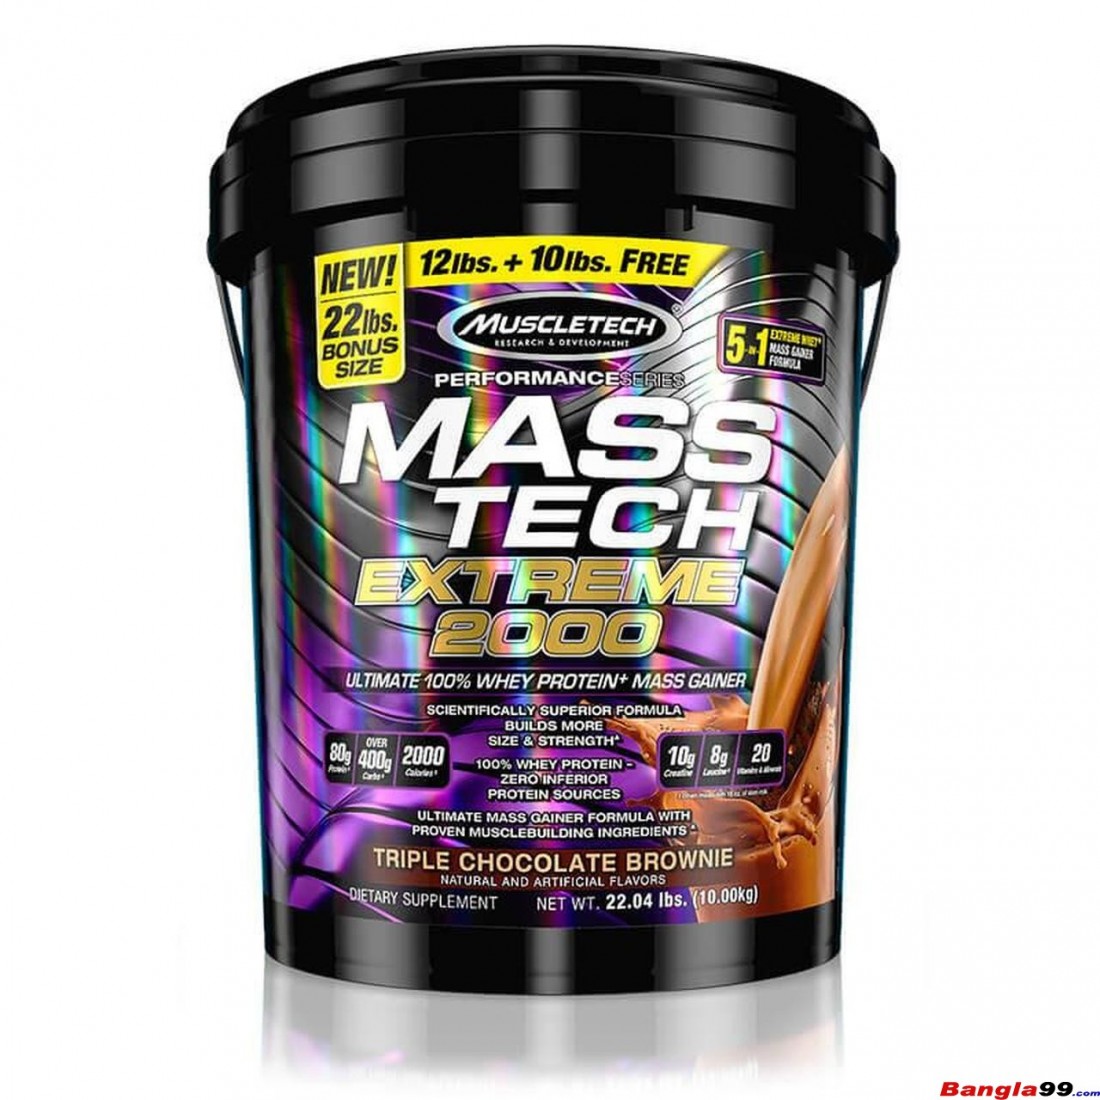 Muscletech Mass Tech Extreme 2000 Mass 22lbs Price In Bangladesh Bd 7875